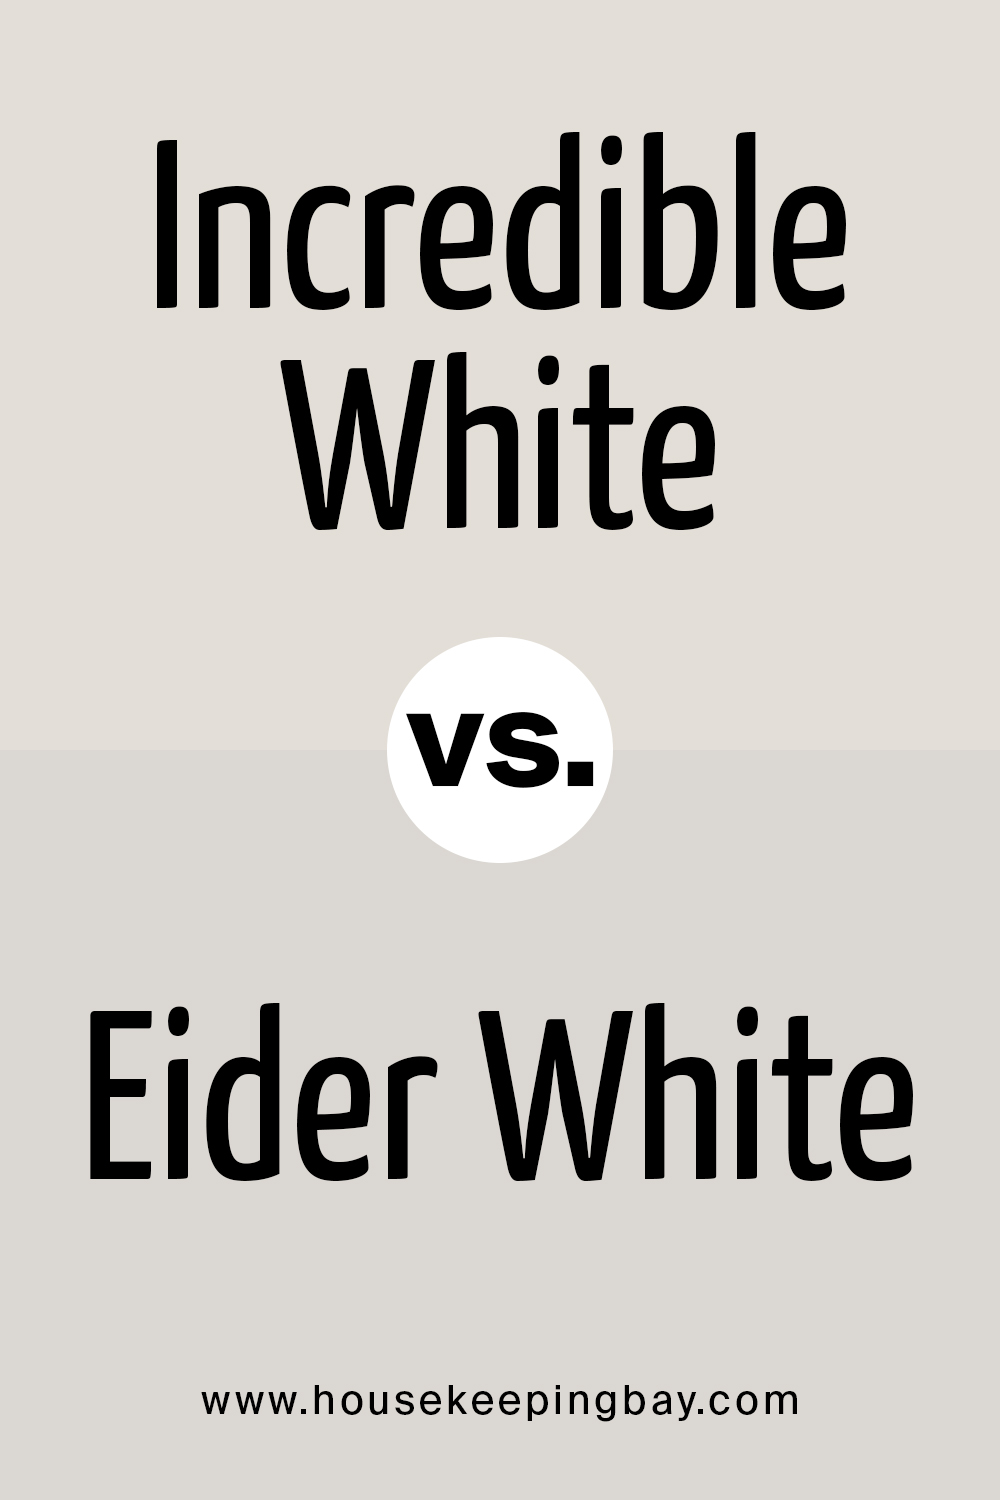 Incredible White vs Eider White